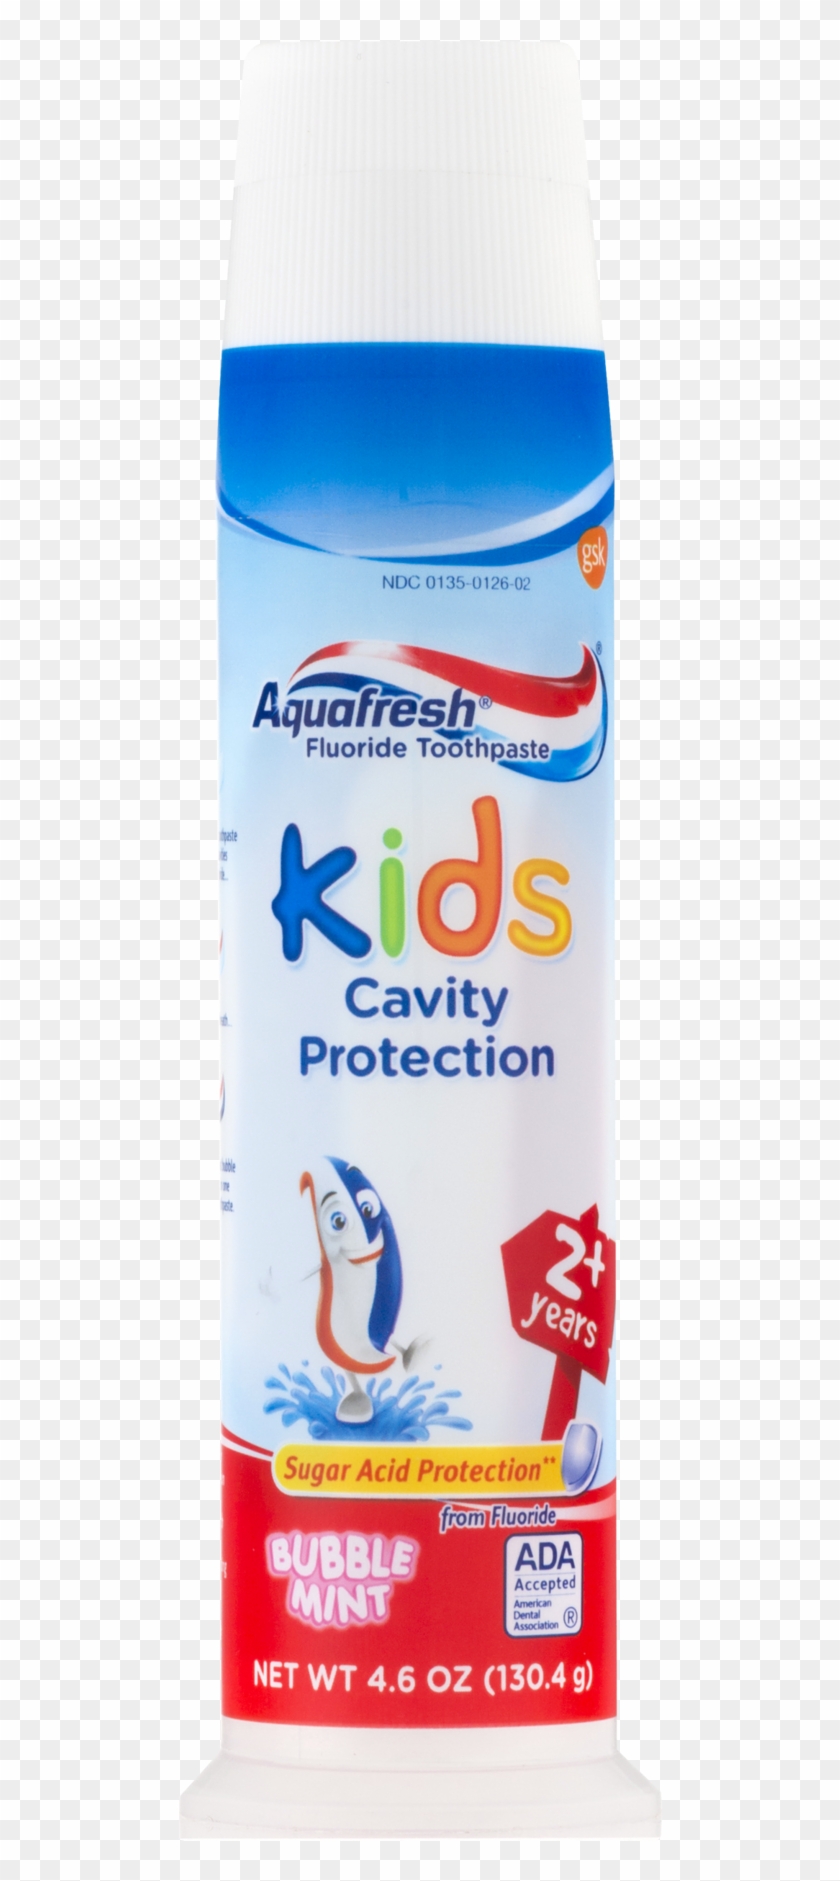 Aquafresh Fluoride Toothpaste Kids Cavity Protection - Toothpaste #479216